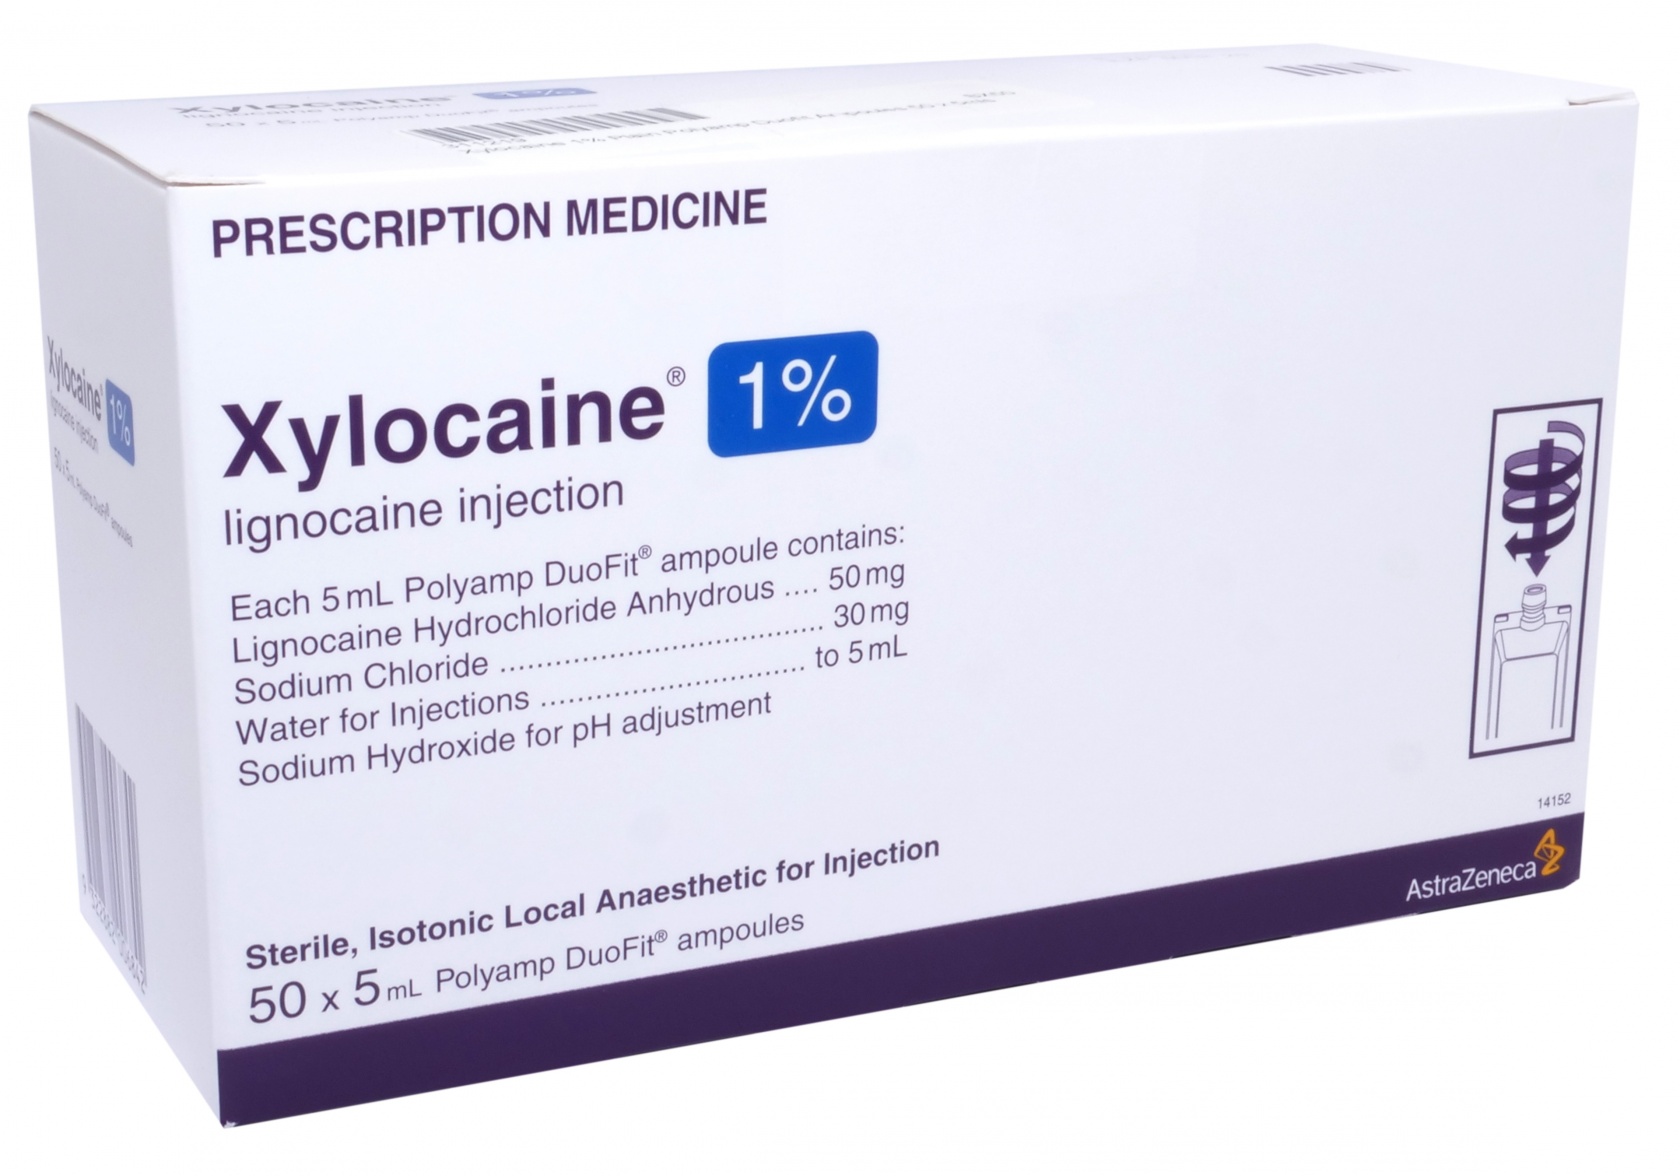 Xylocaine 1% Plain Polyamp Duofit Ampoules 50 x 5mls